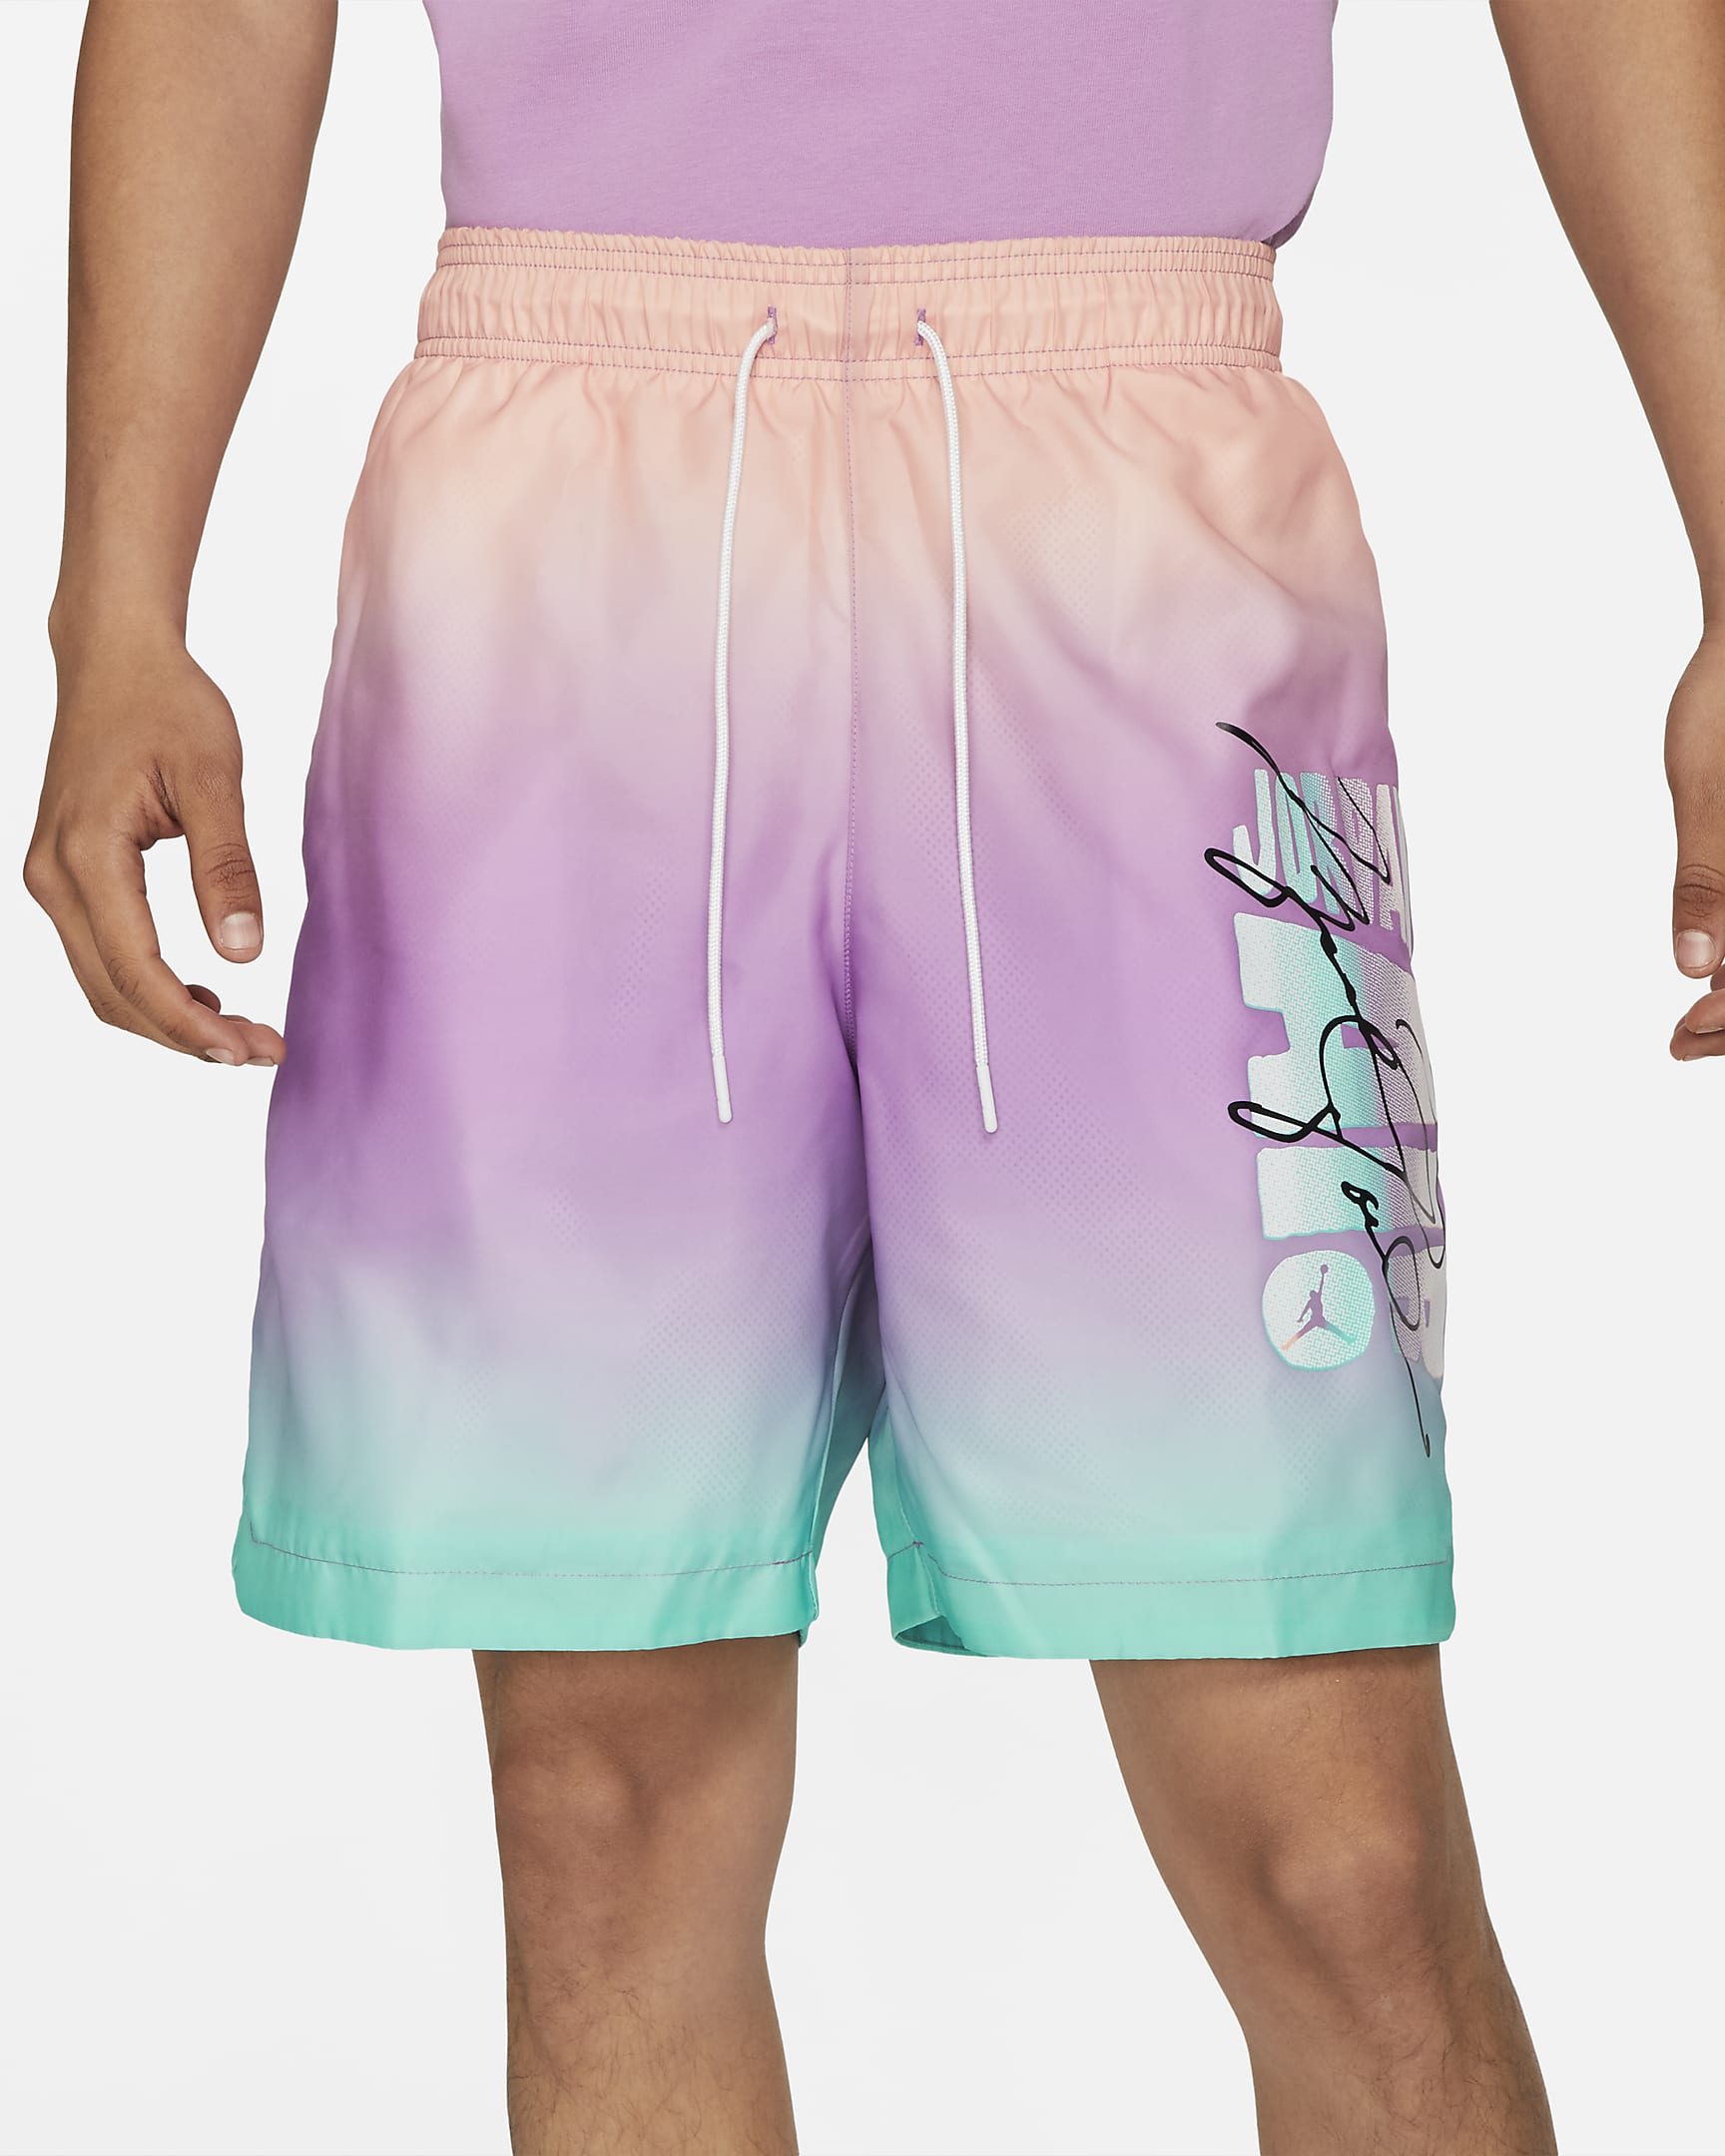 Air Jordan 1 Mid Purple Pulse Outfit Shirt and Shorts Match